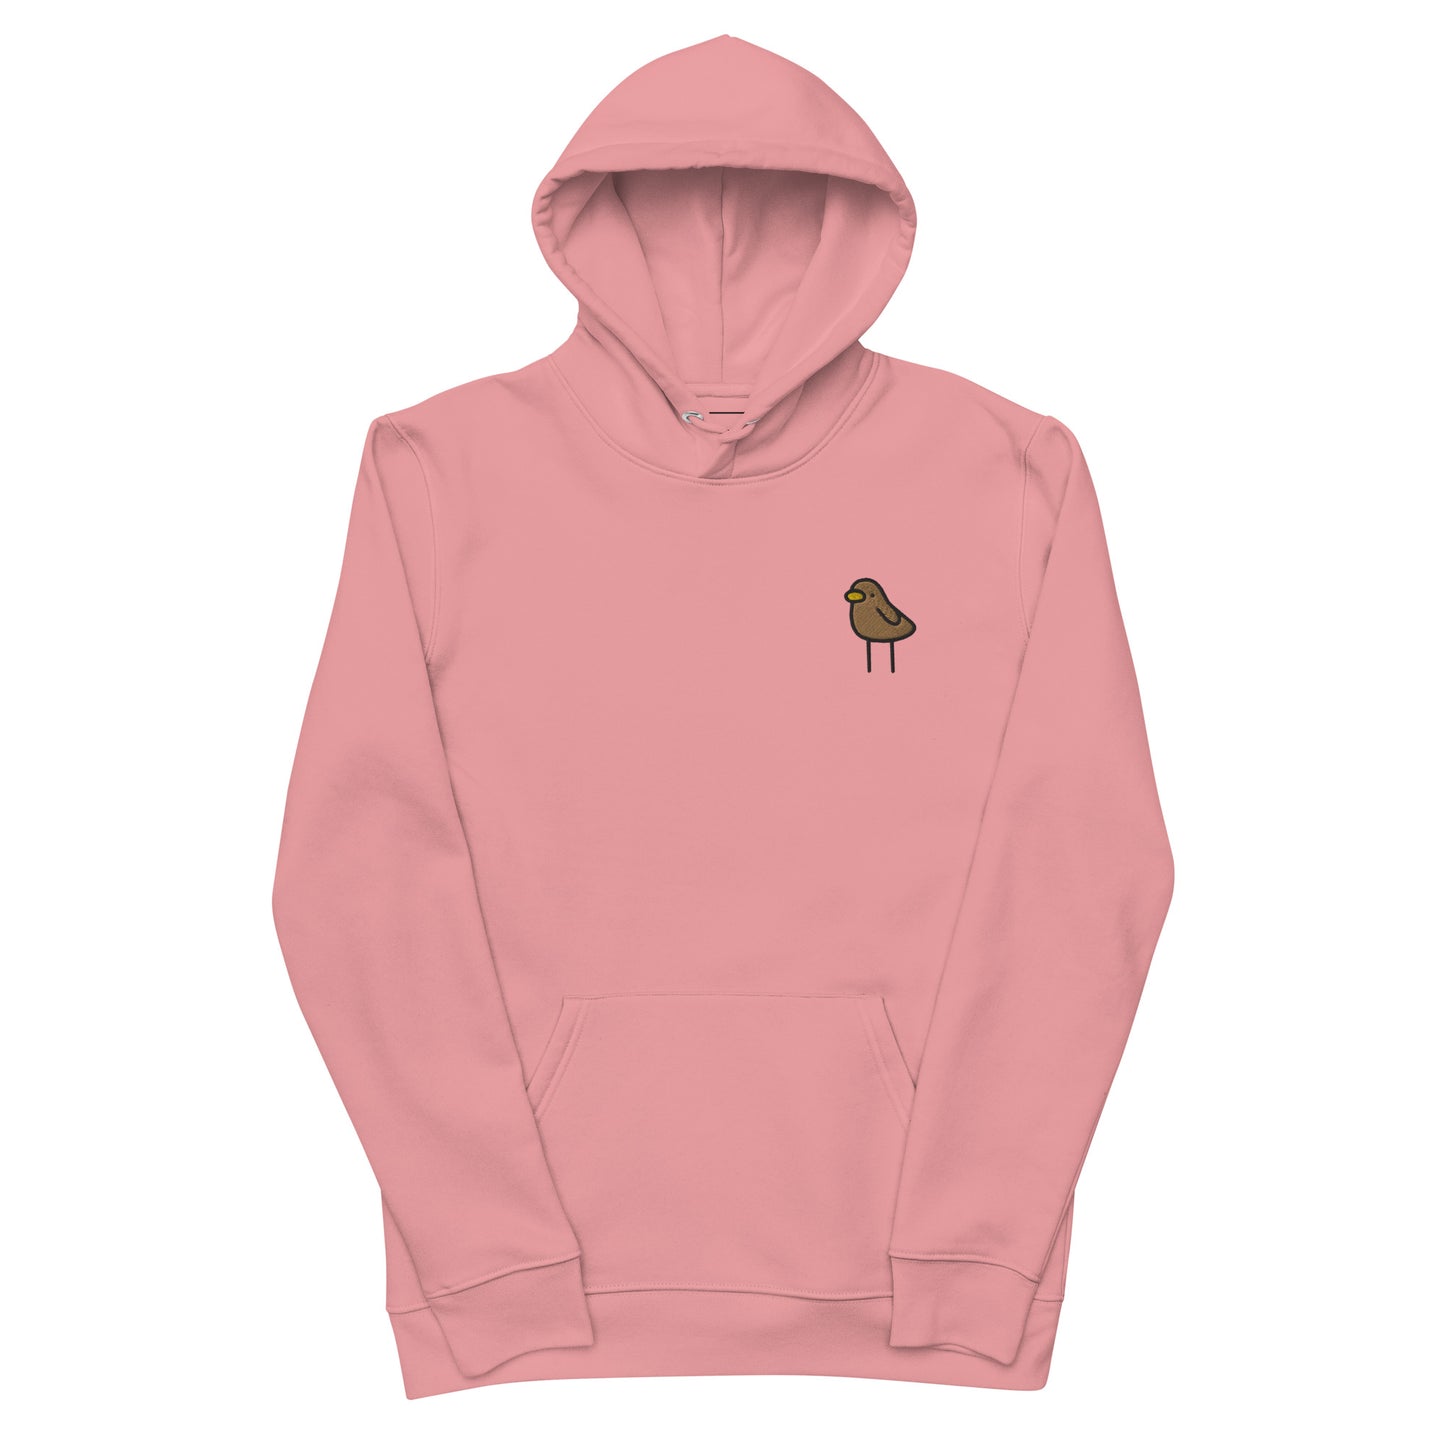 Vengabirb hoodie